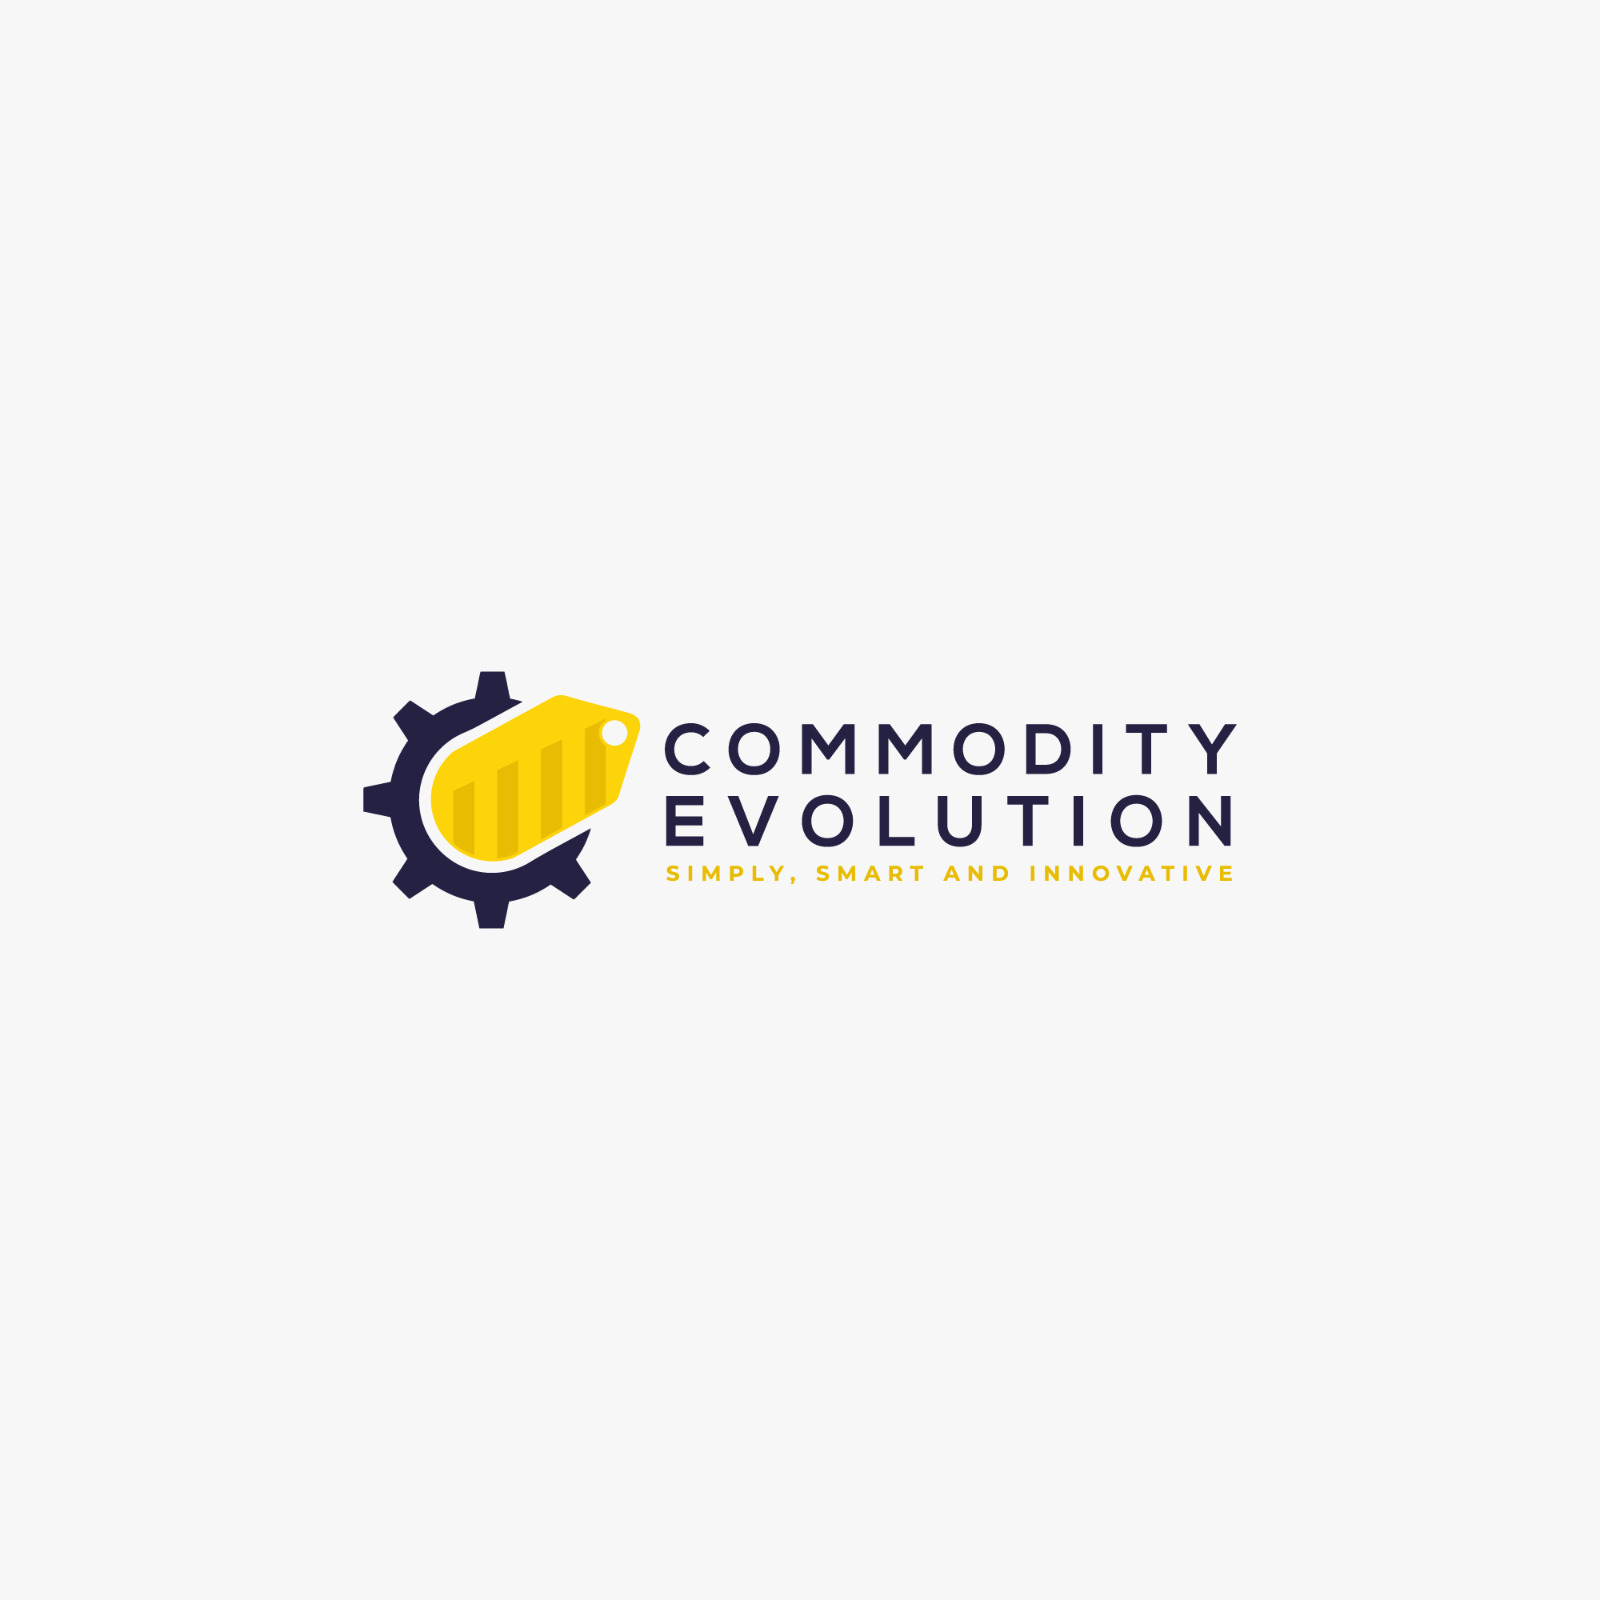 Commodity evolution